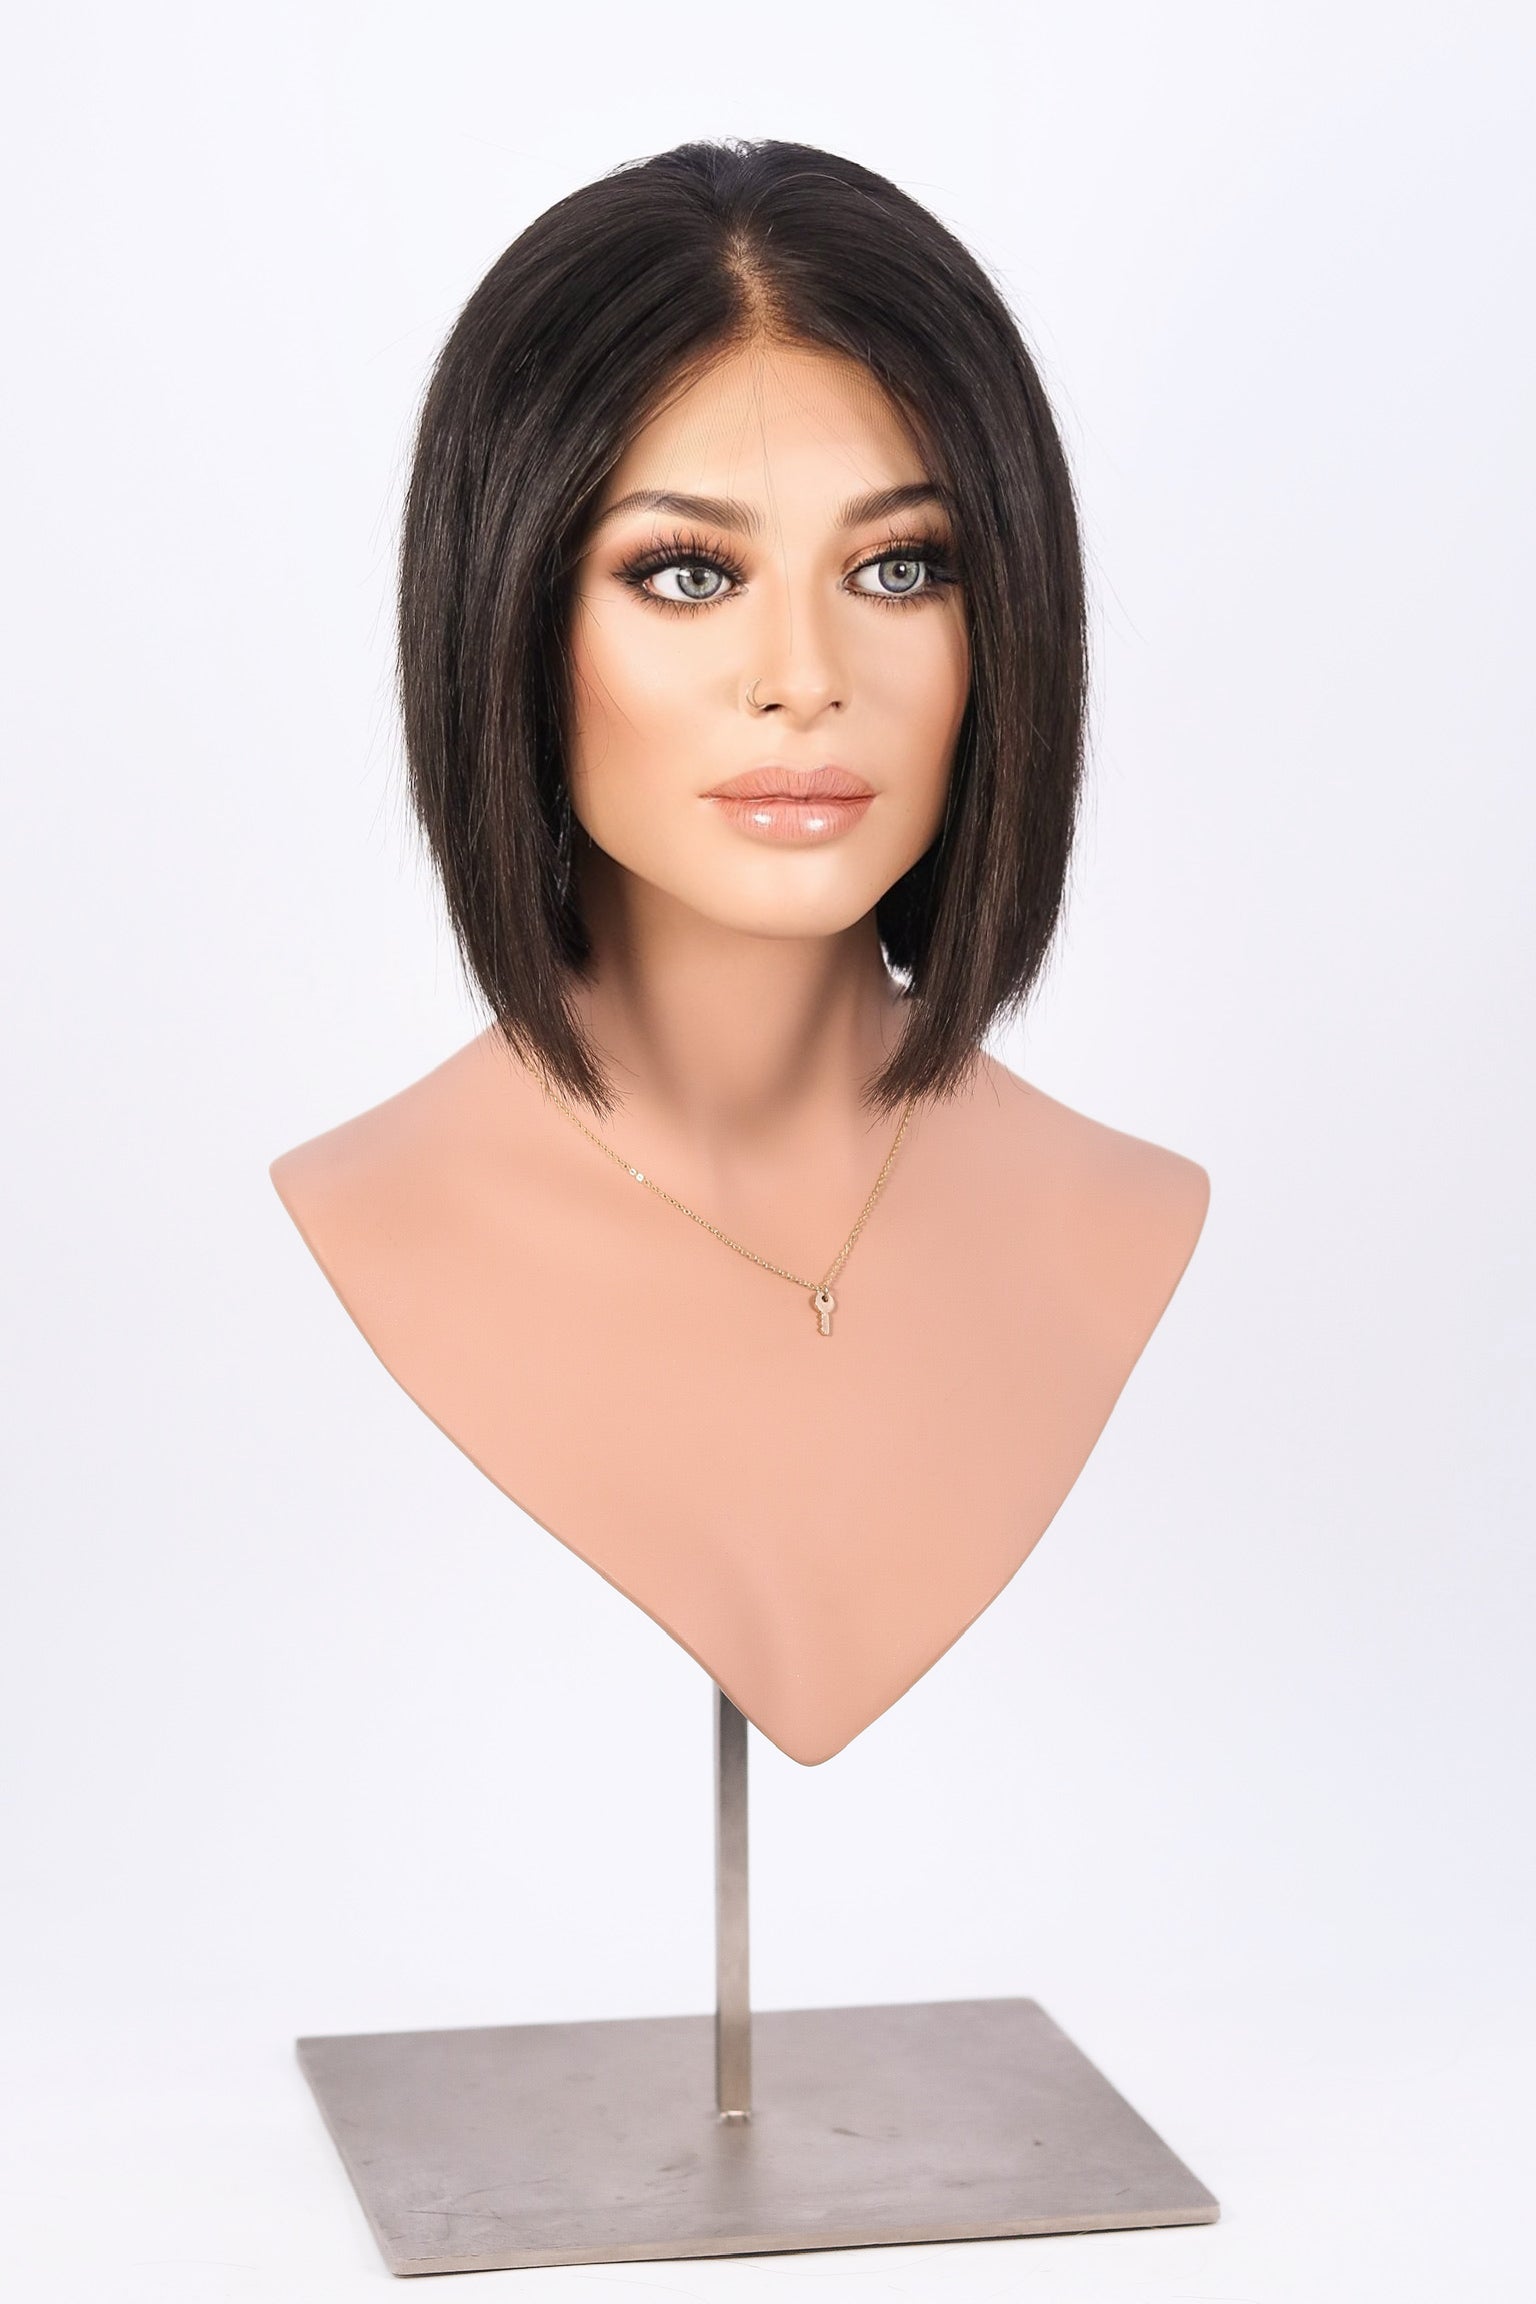 Mannequin Head Brooke - 100% Human Hair